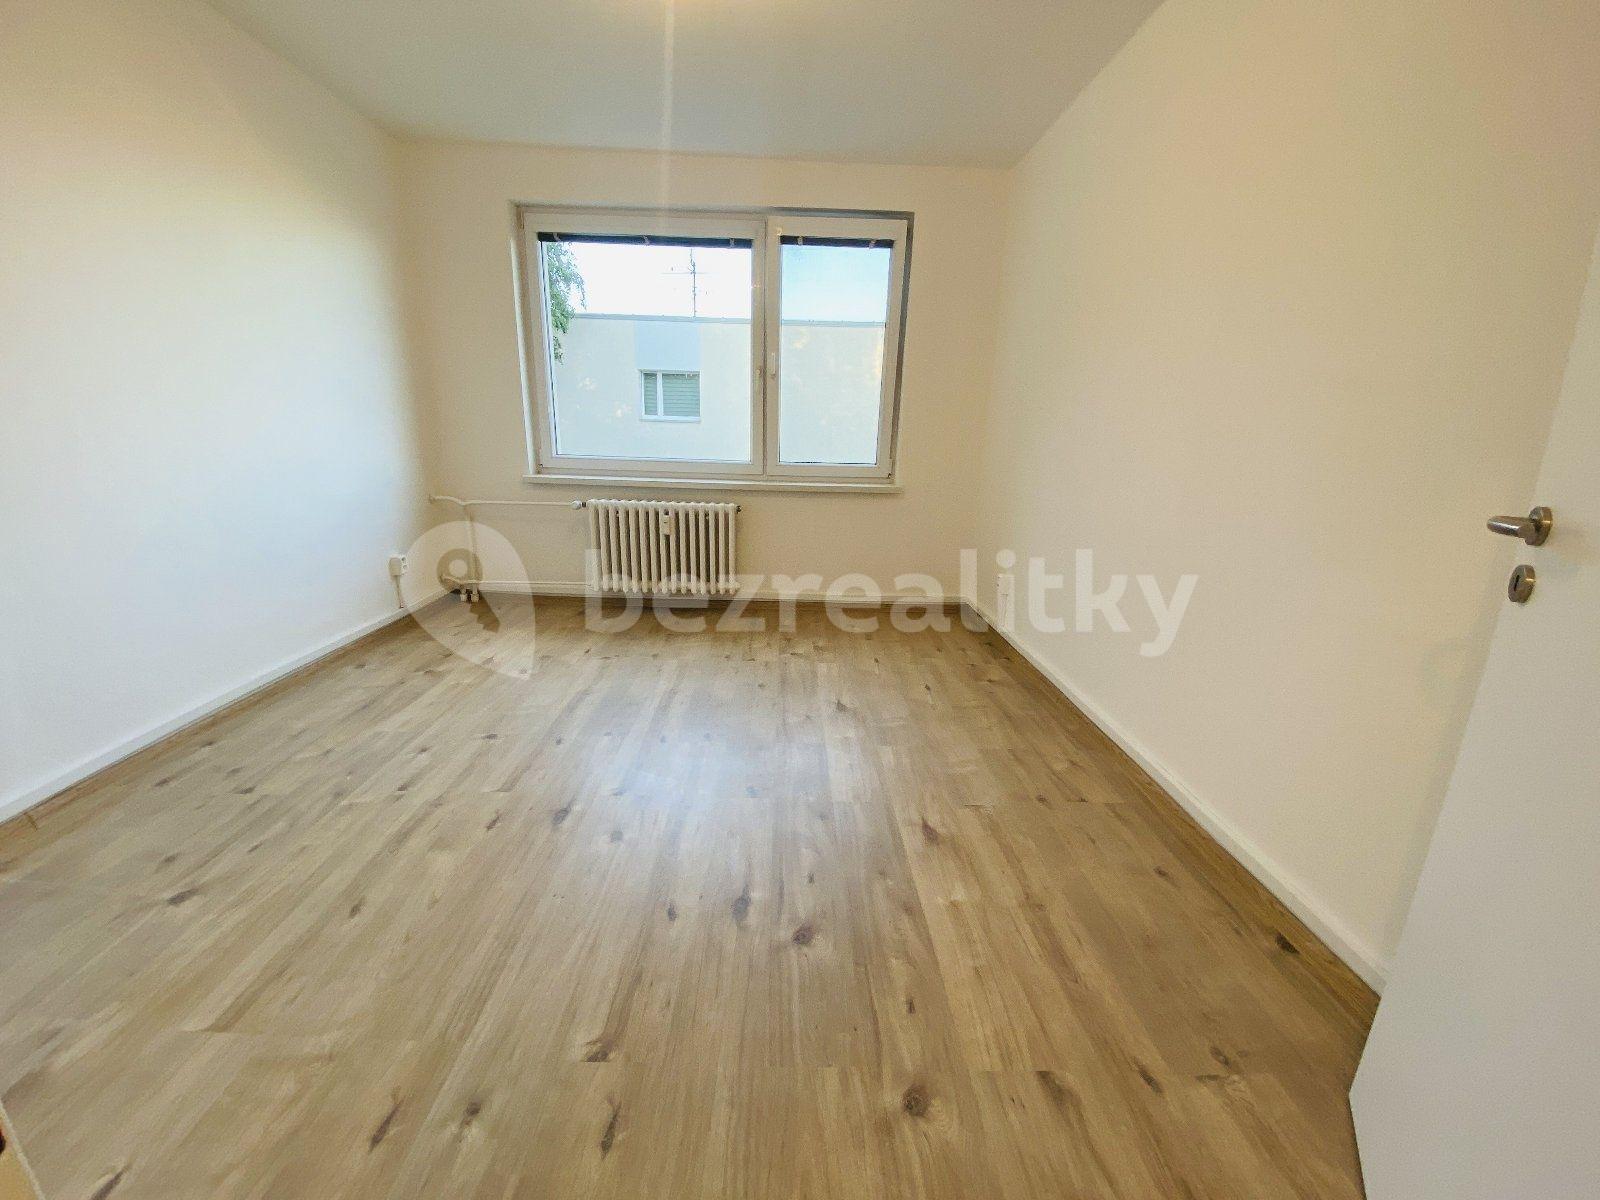 2 bedroom flat to rent, 55 m², Tylova, Ostrava, Moravskoslezský Region